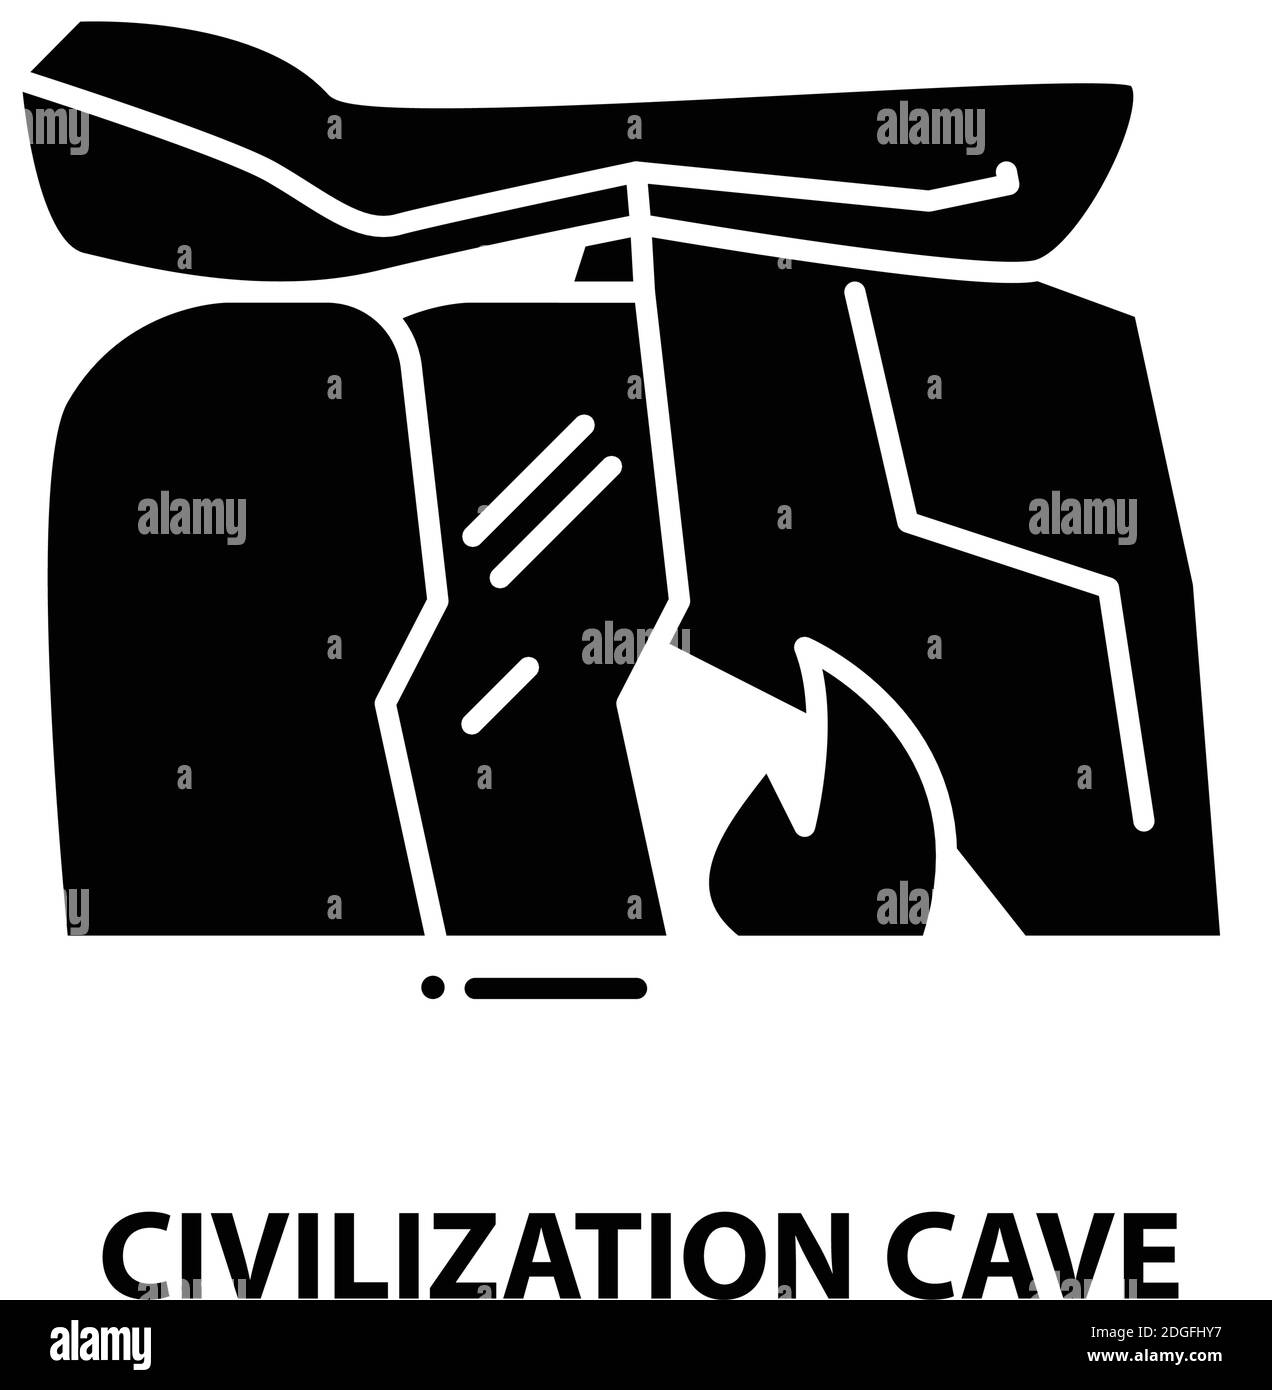 civilization cave icon, black vector sign with editable strokes, concept illustration Stock Vector